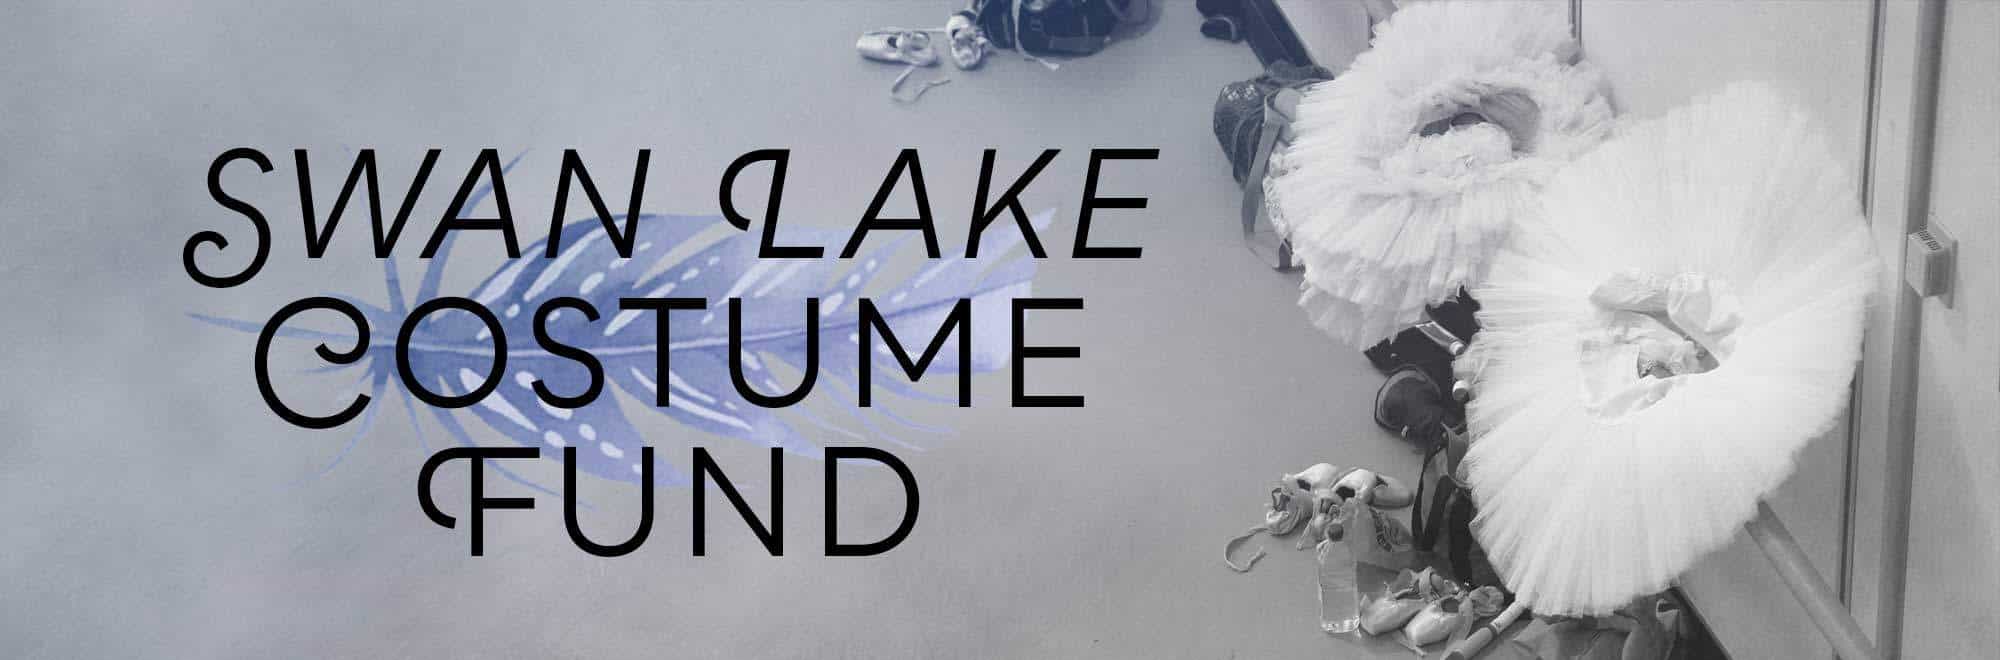 Swan Lake Costume Fund Banner Image